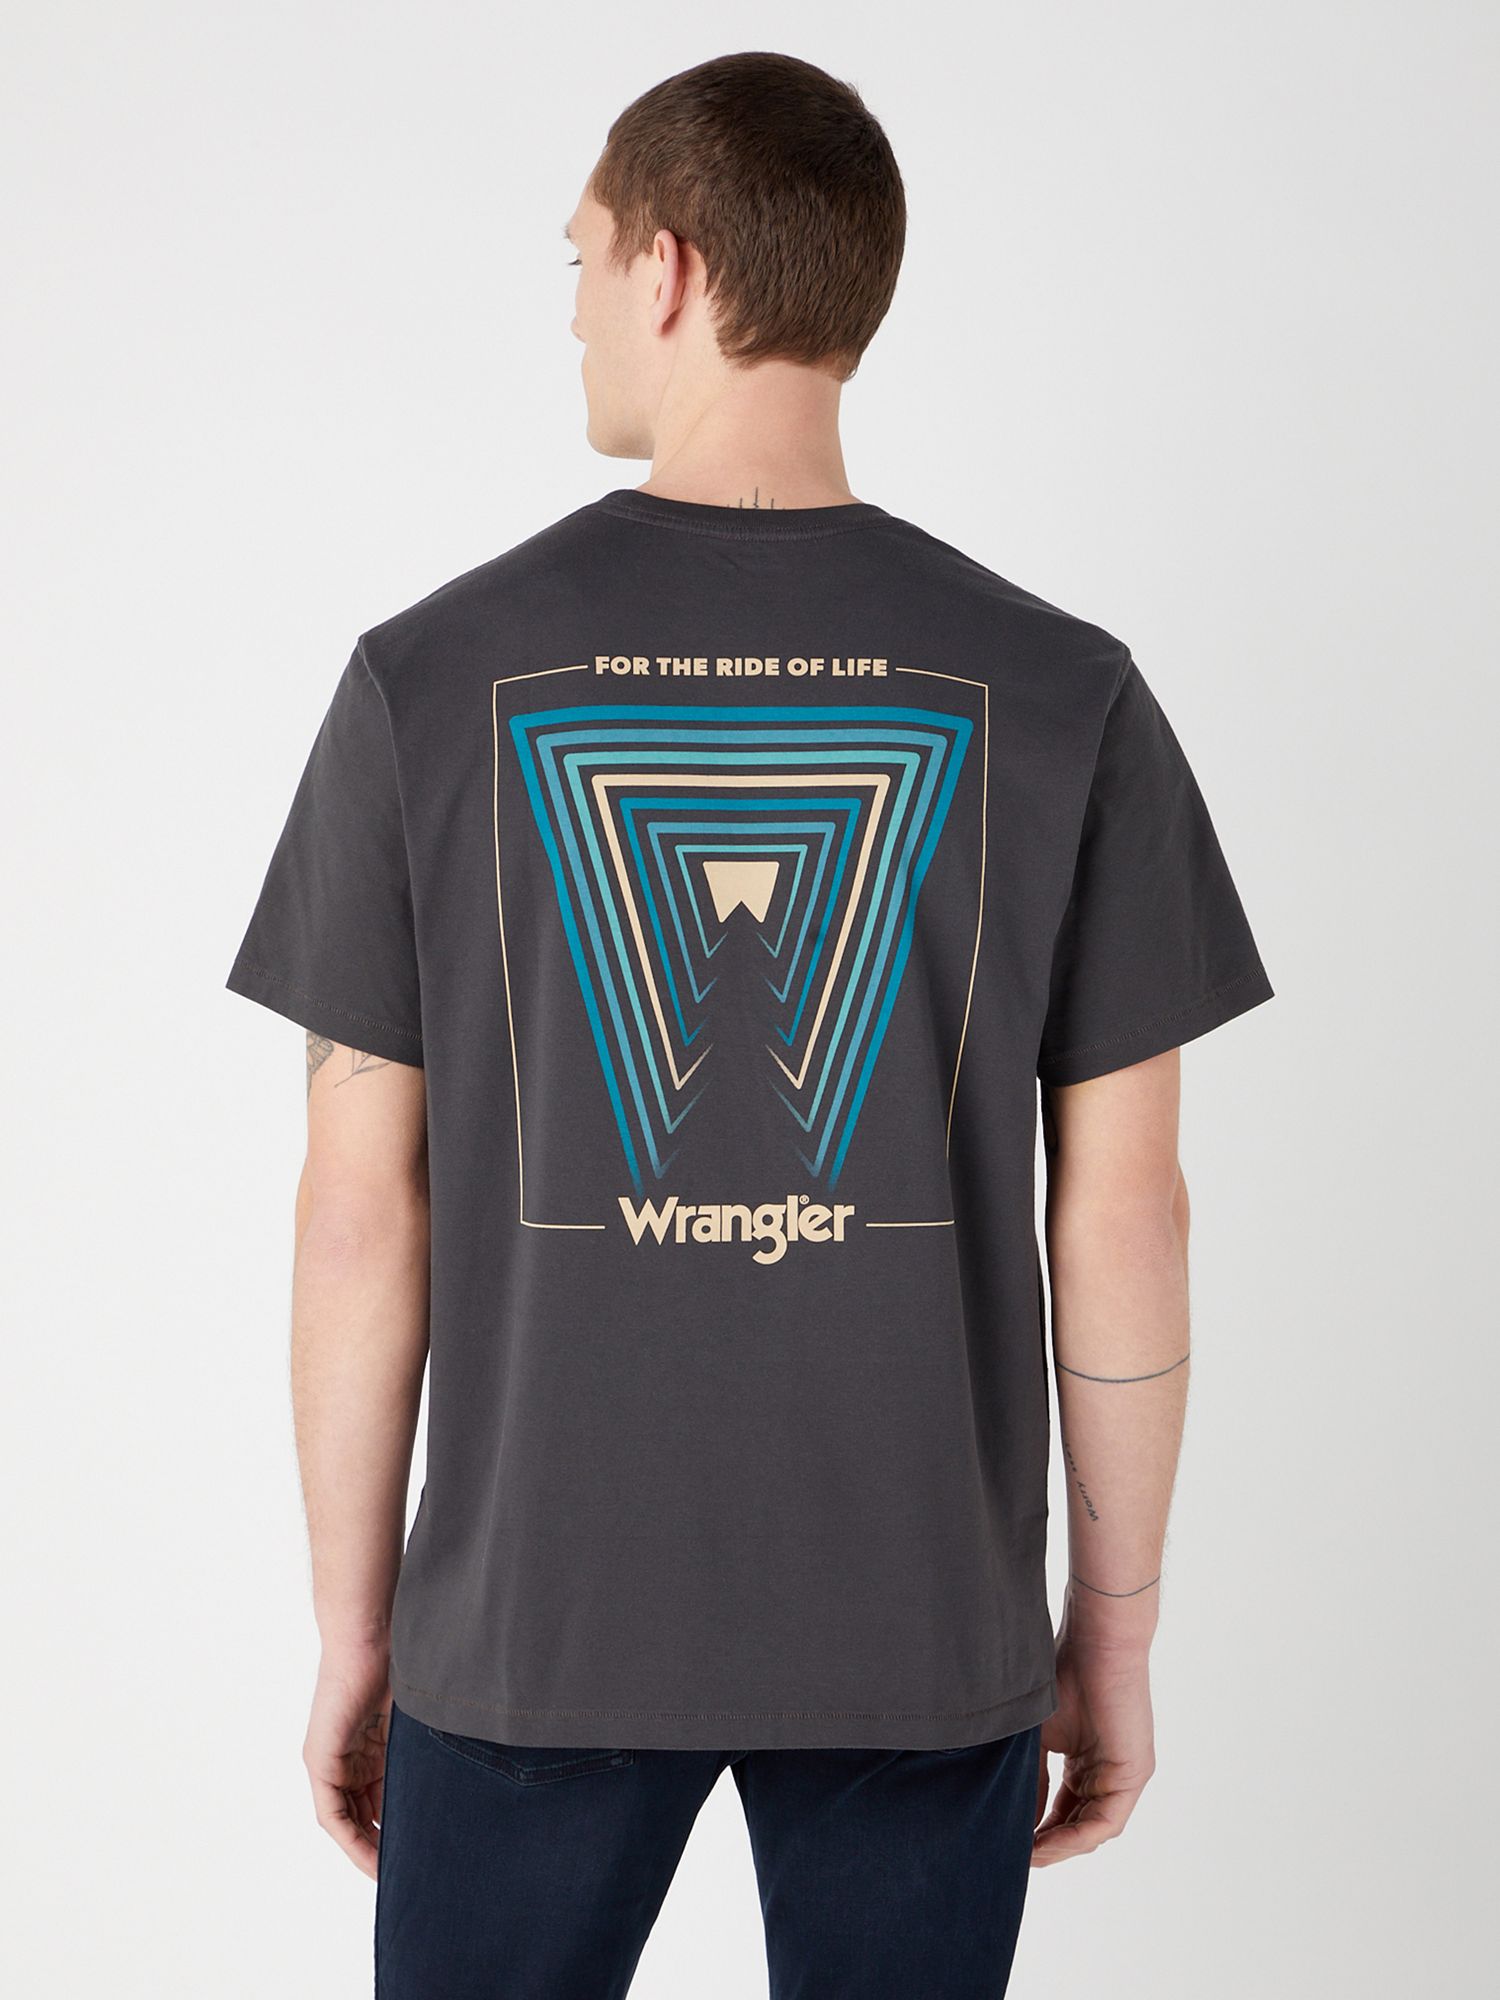 Wrangler Graphic T-Shirt, Black, L